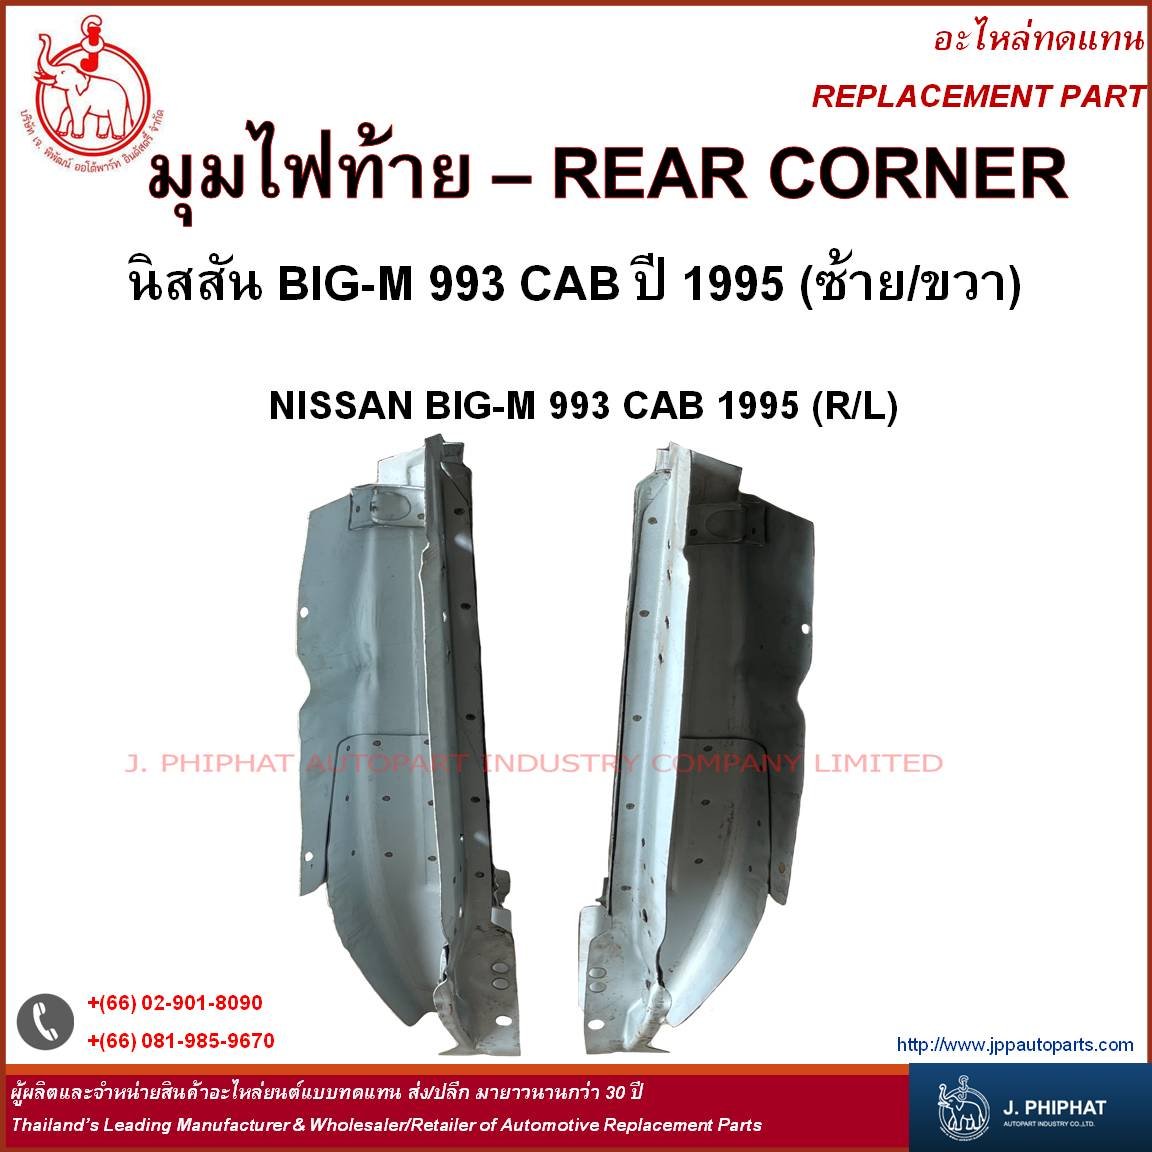 Rear Corner - NISSAN 993 CAB (R/L)